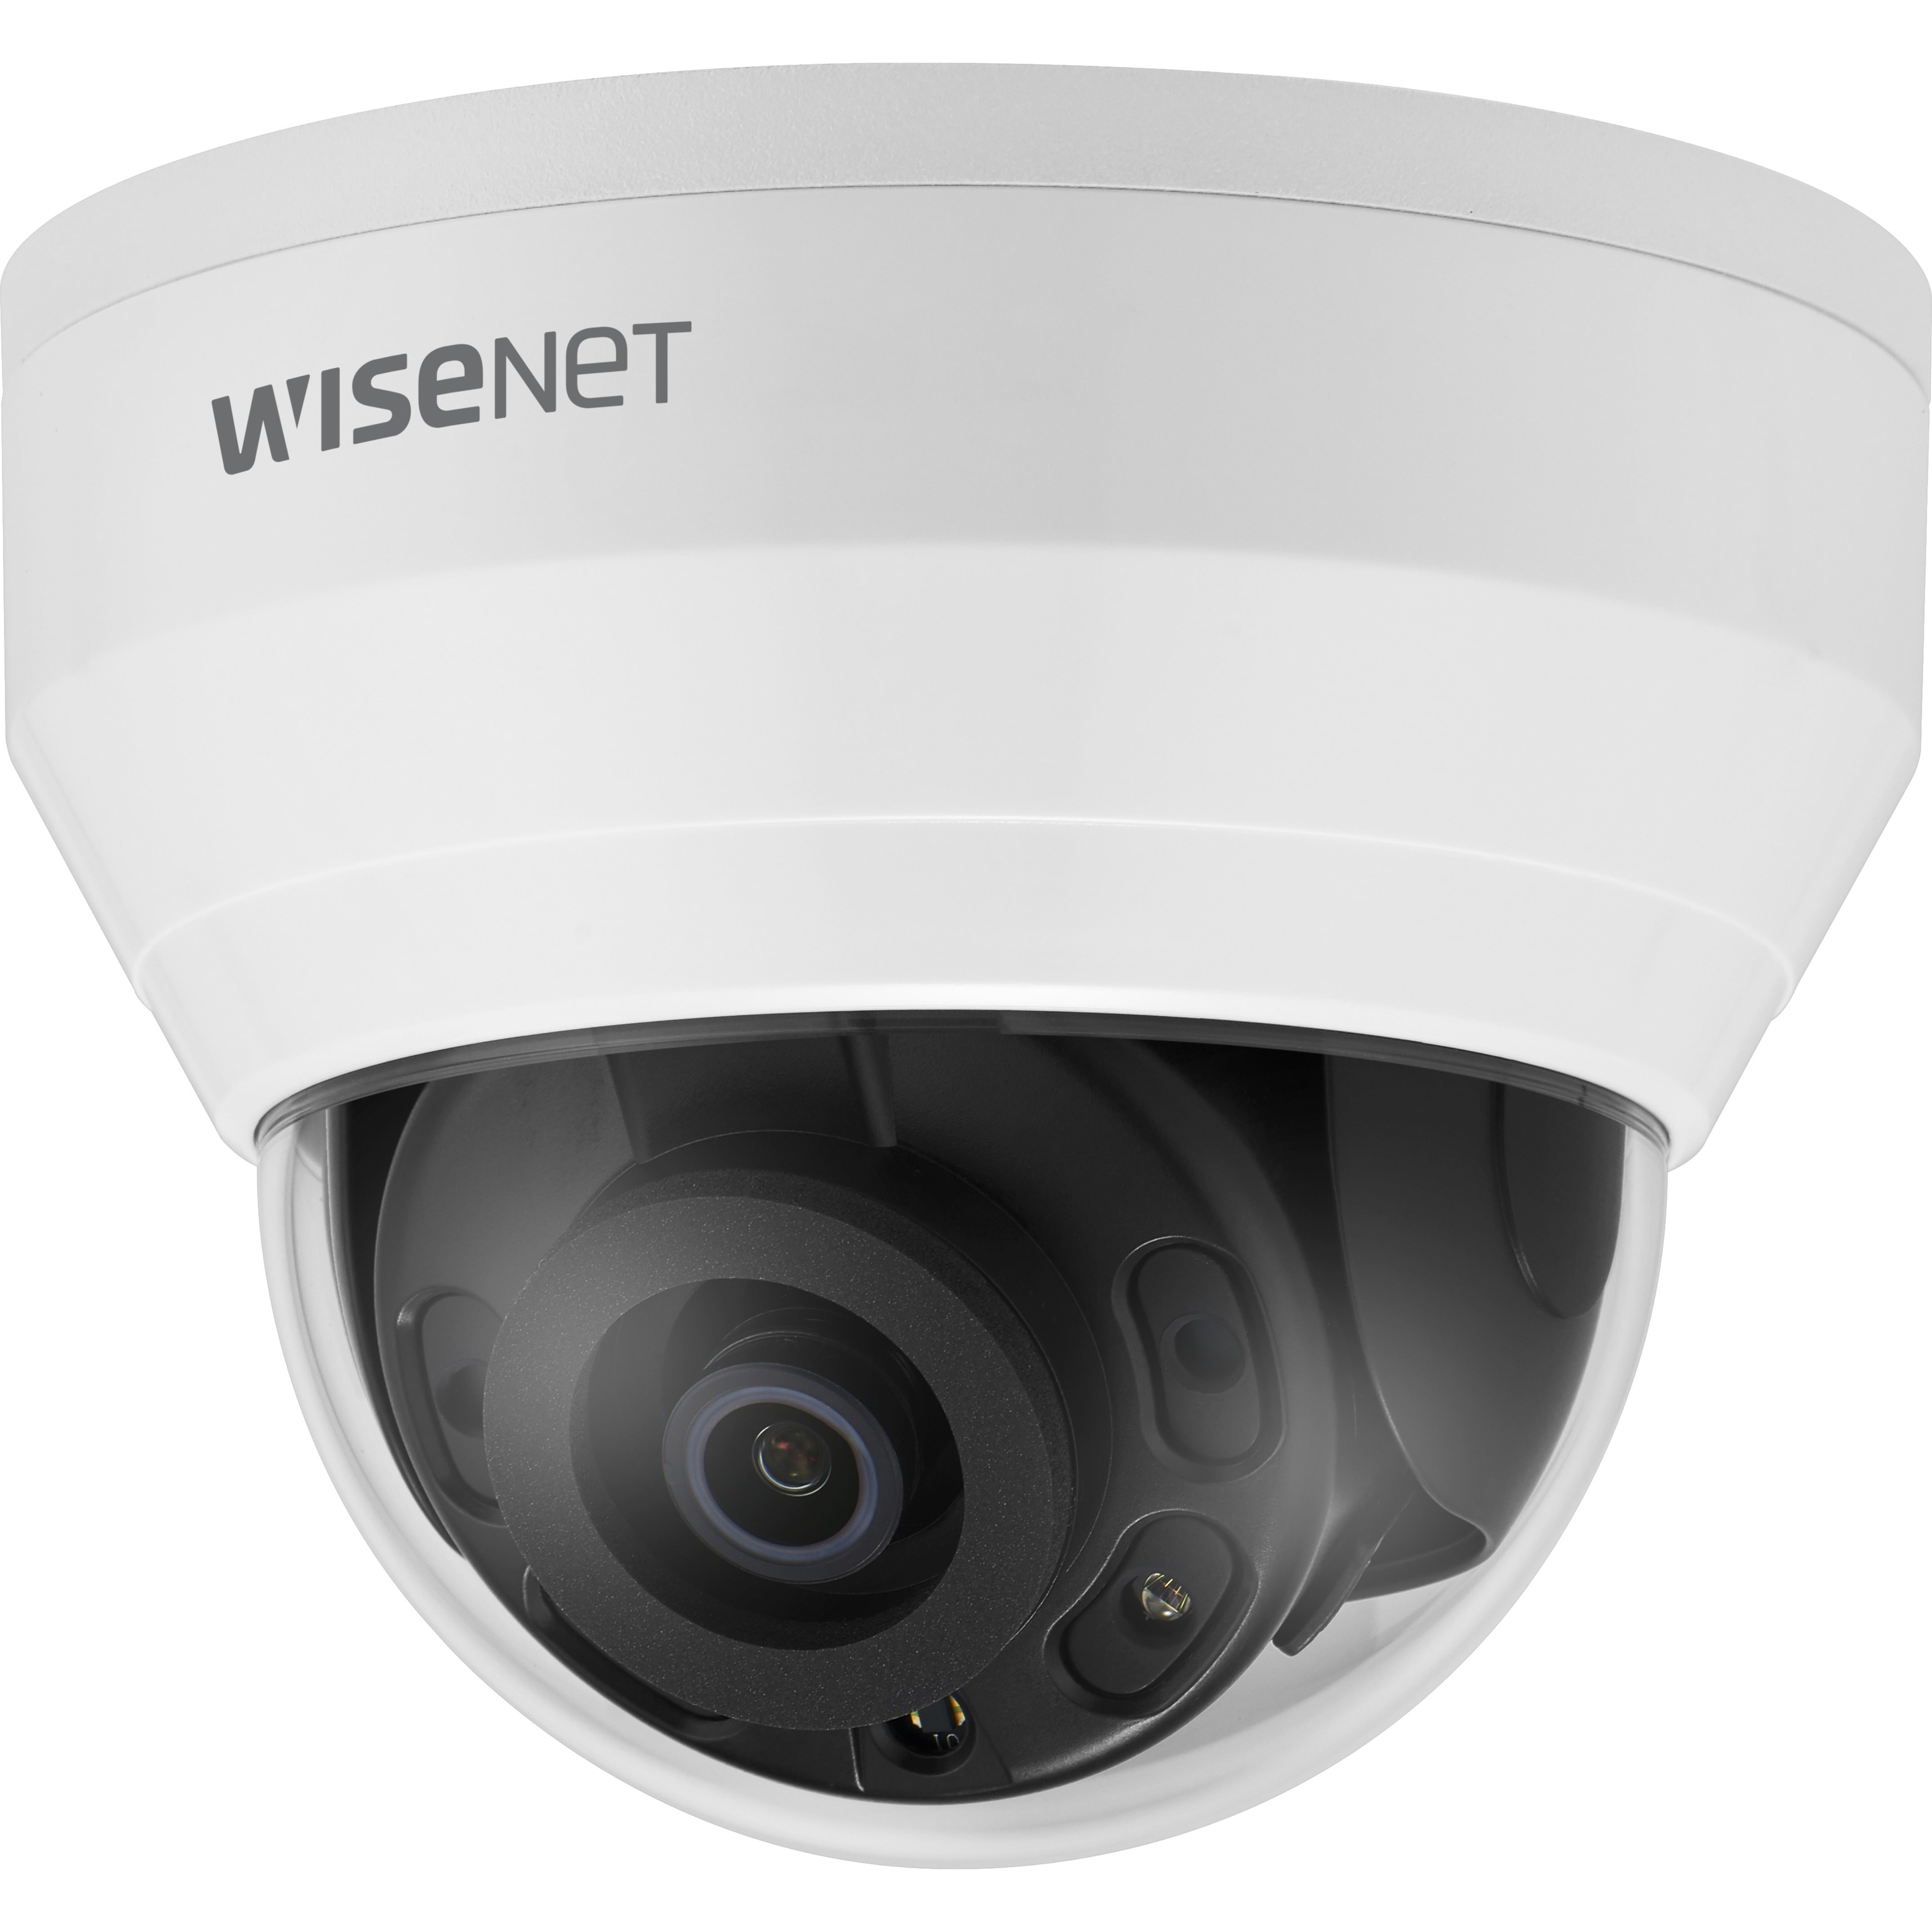 Wisenet QND-8020R 5 MP Network IR Dome Camera, Color, Dome